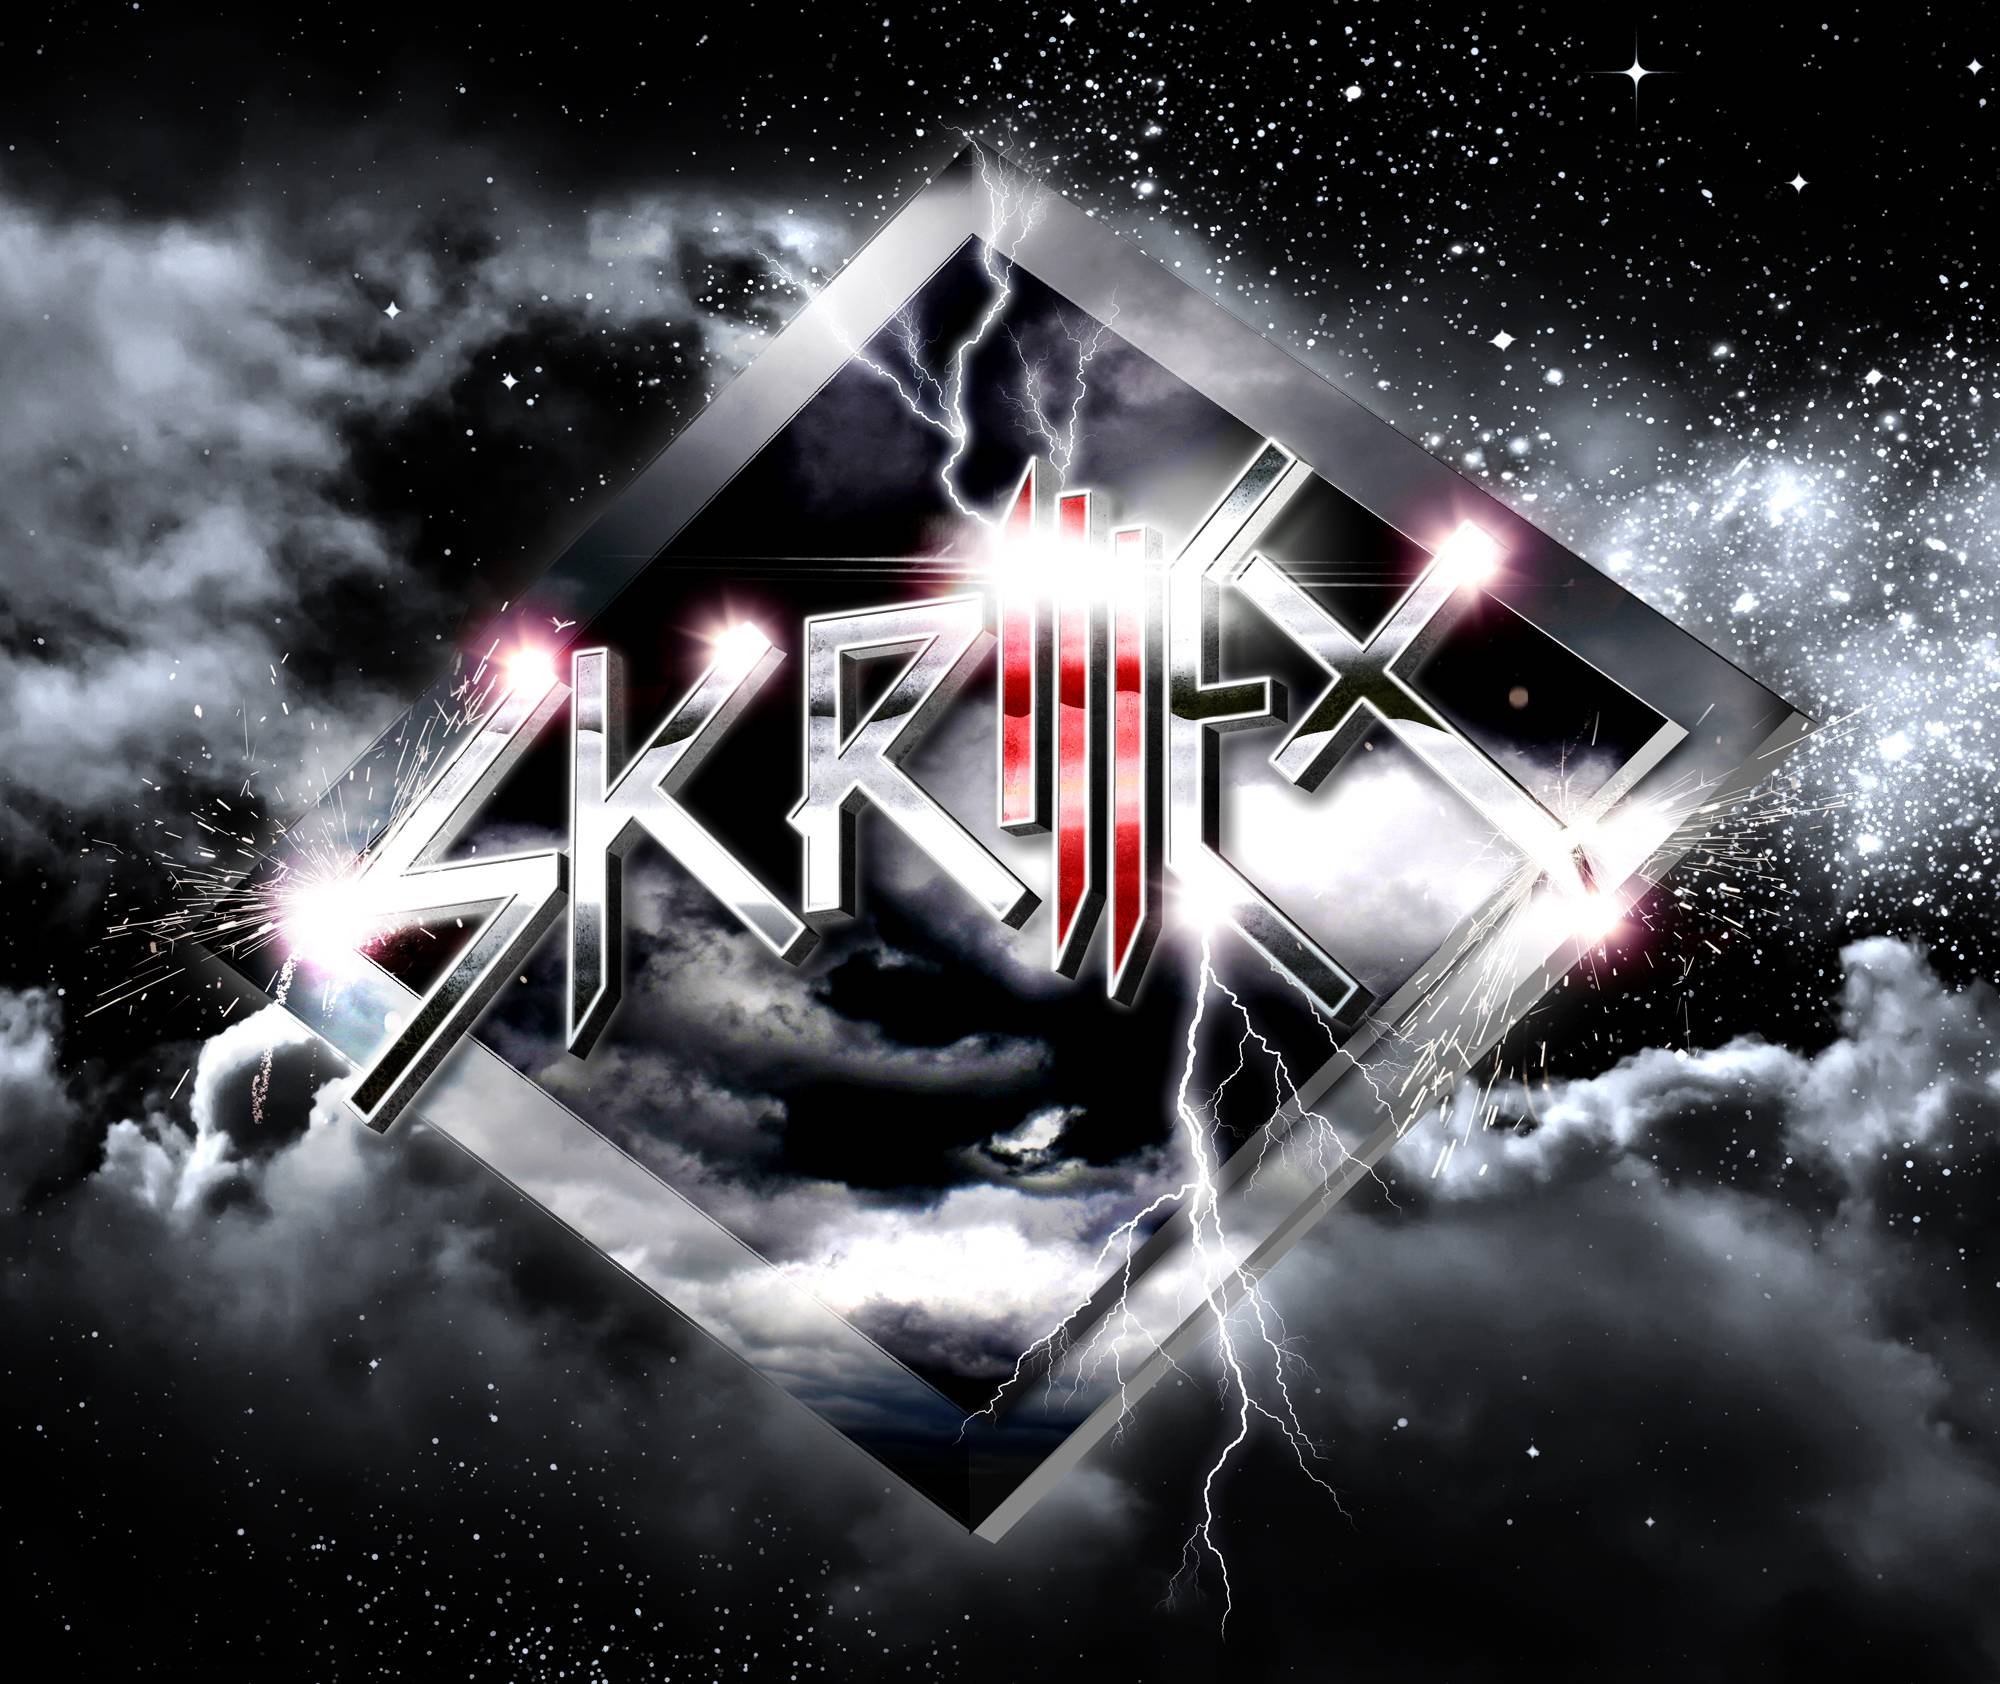 Skrillex logos wallpaper HD 1080p!